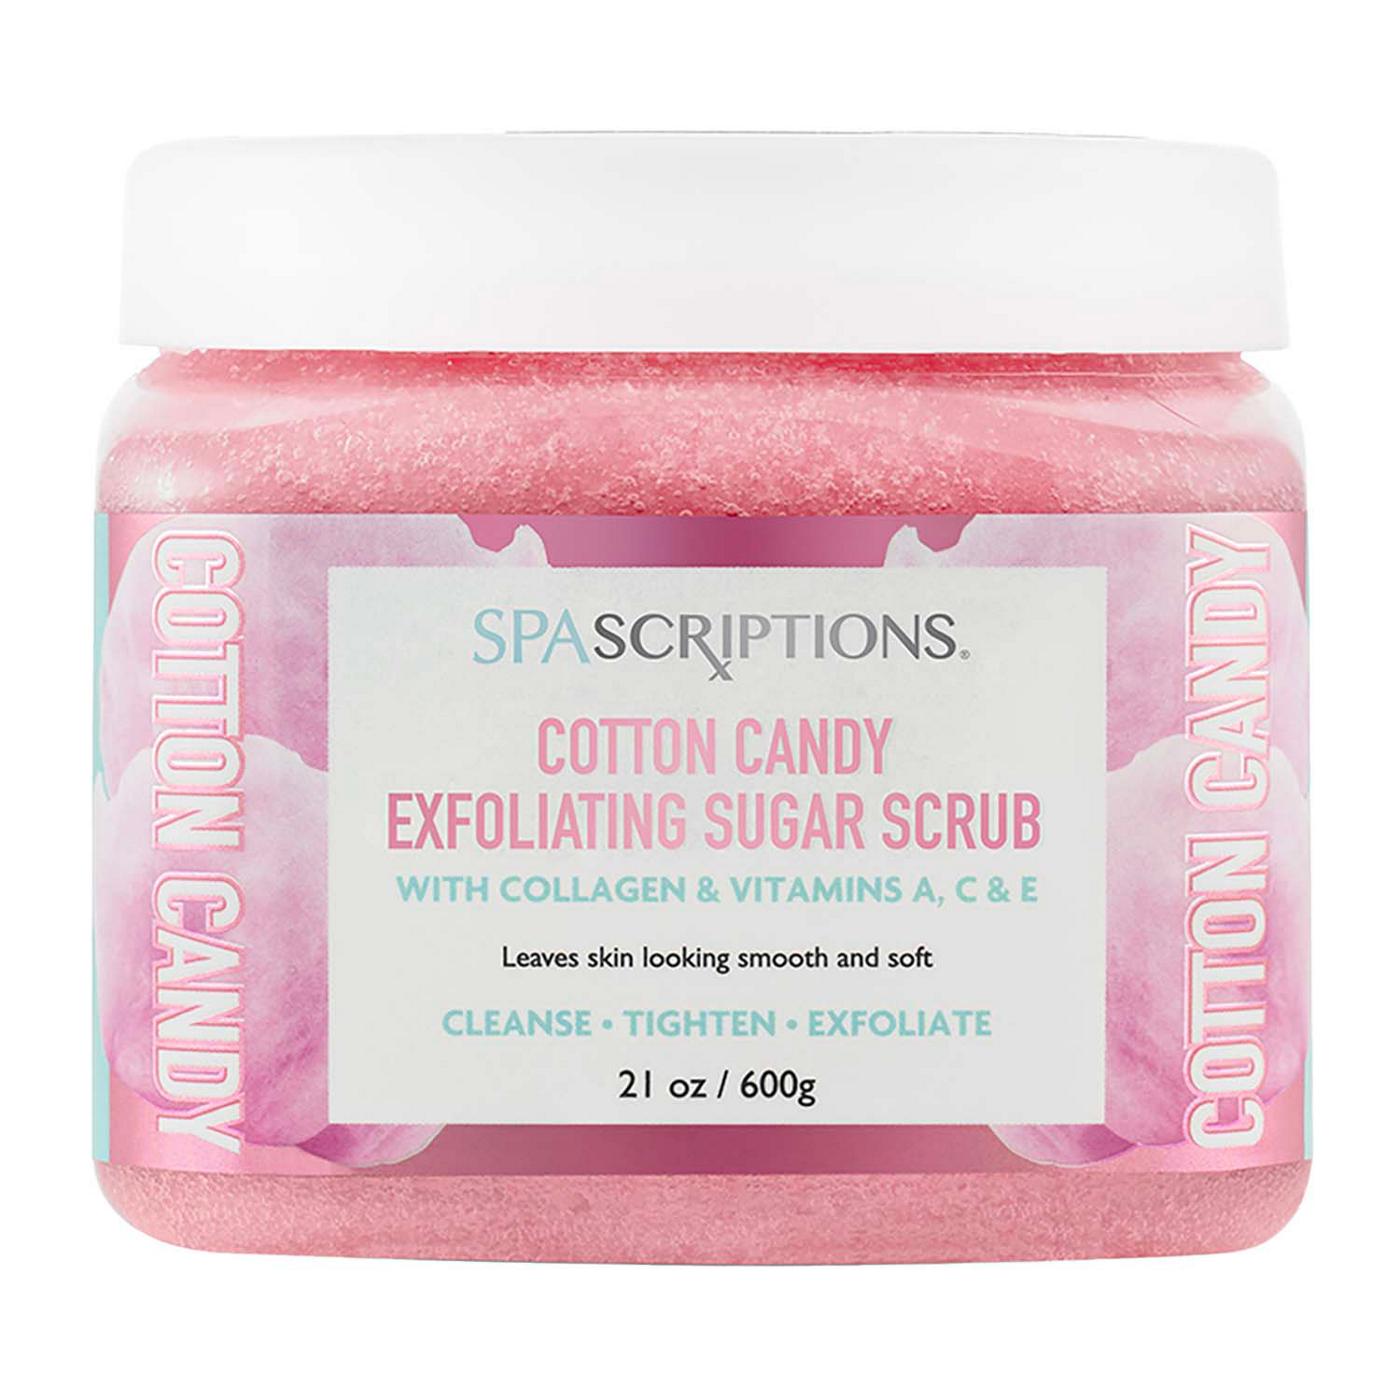 SpaScriptions Exfoliating Sugar Scrub - Cotton Candy; image 1 of 6